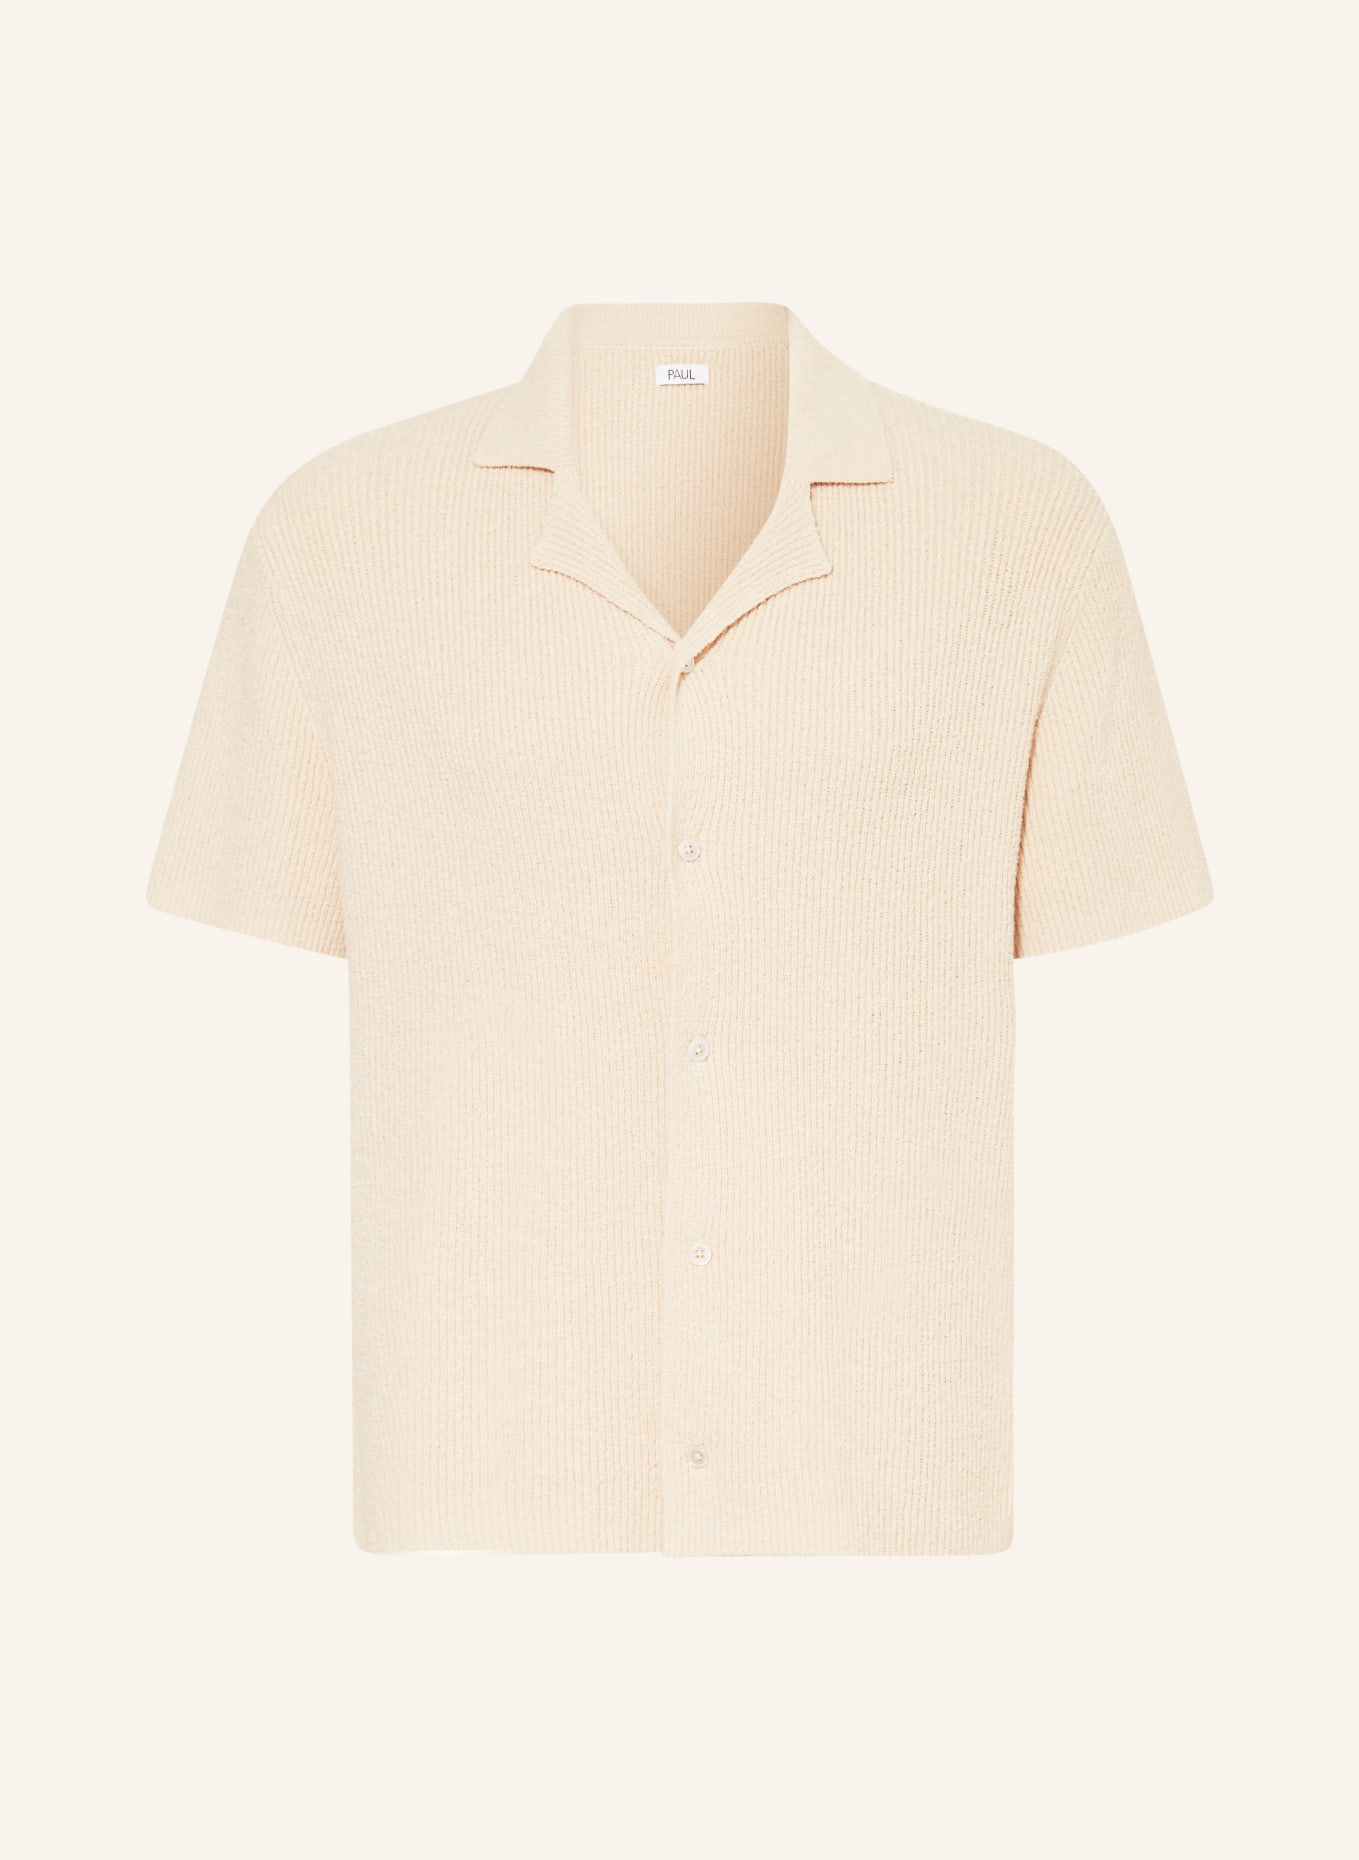 PAUL Strick-Resorthemd, Farbe: BEIGE (Bild 1)